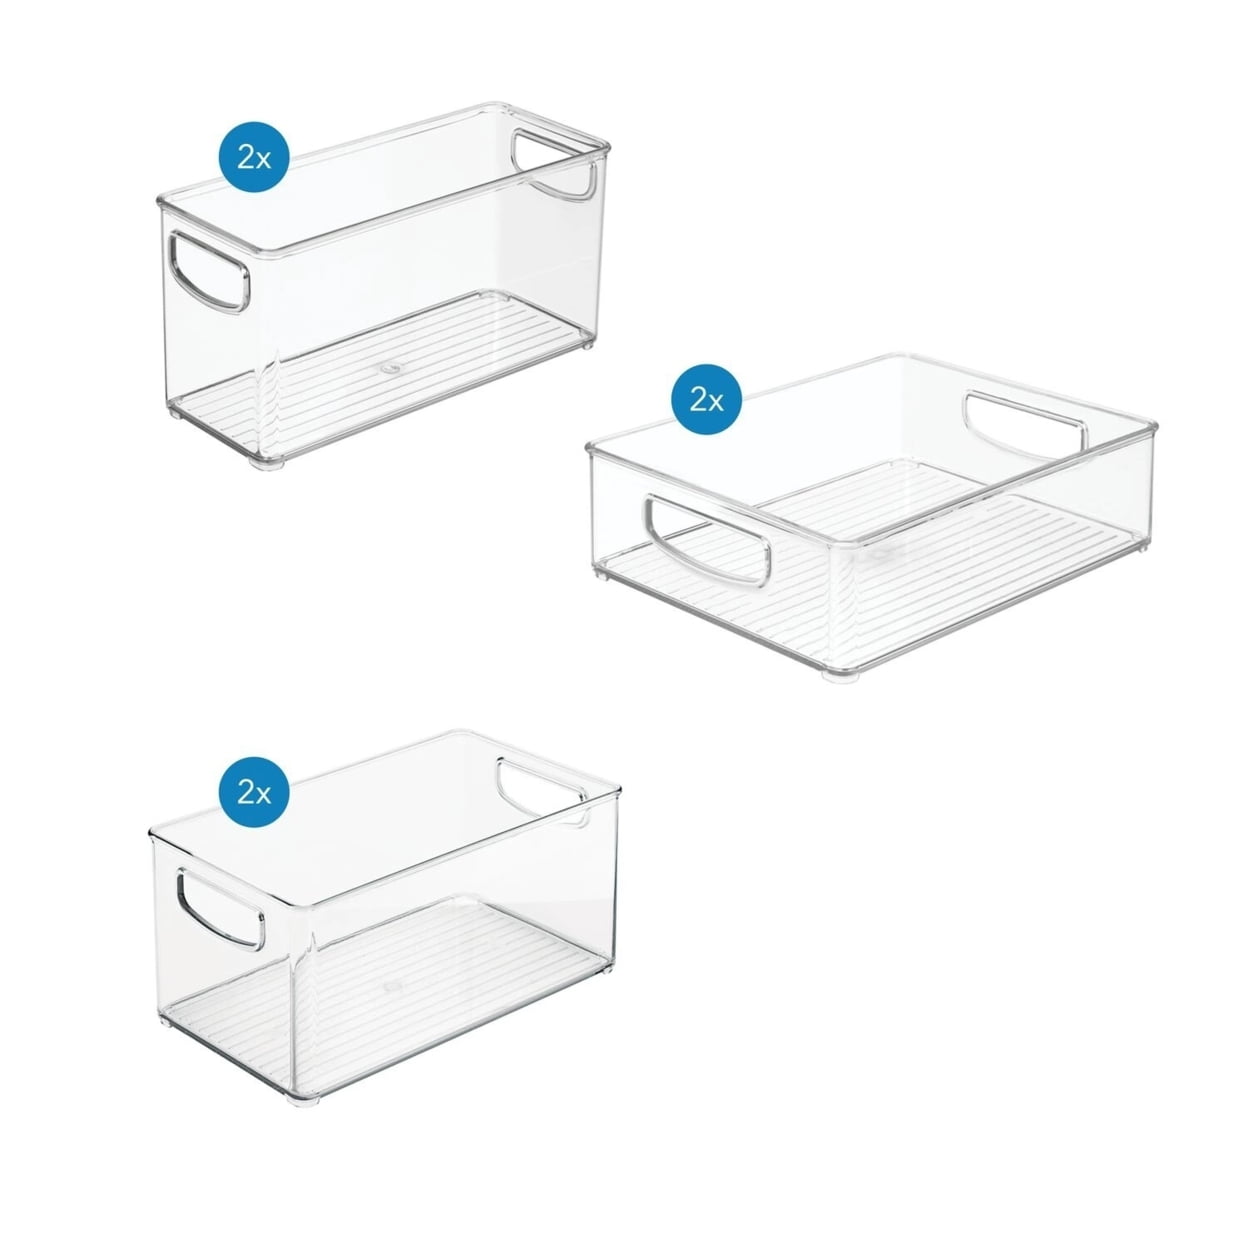 iDesign 6-Piece Recycled Kitchen Organization and Storage Set.